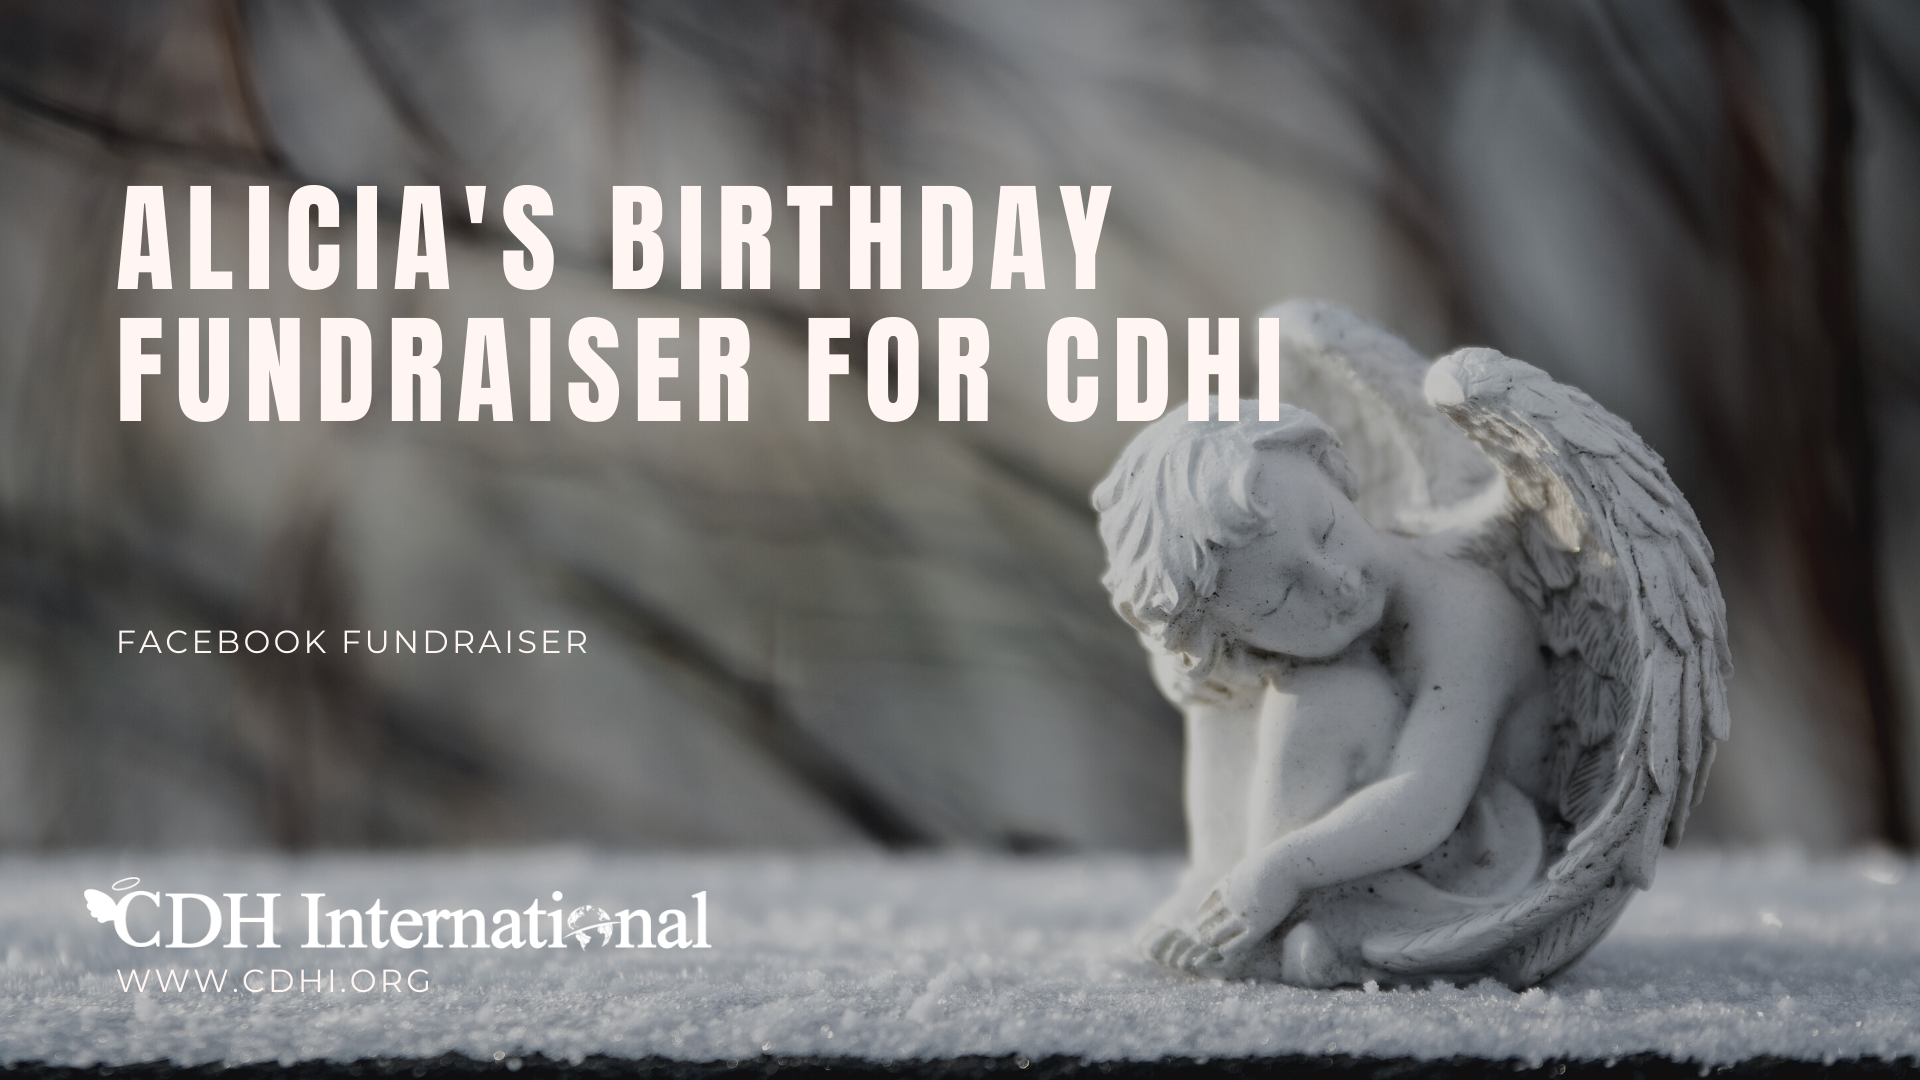 Pat’s Birthday Fundraiser For CDH International